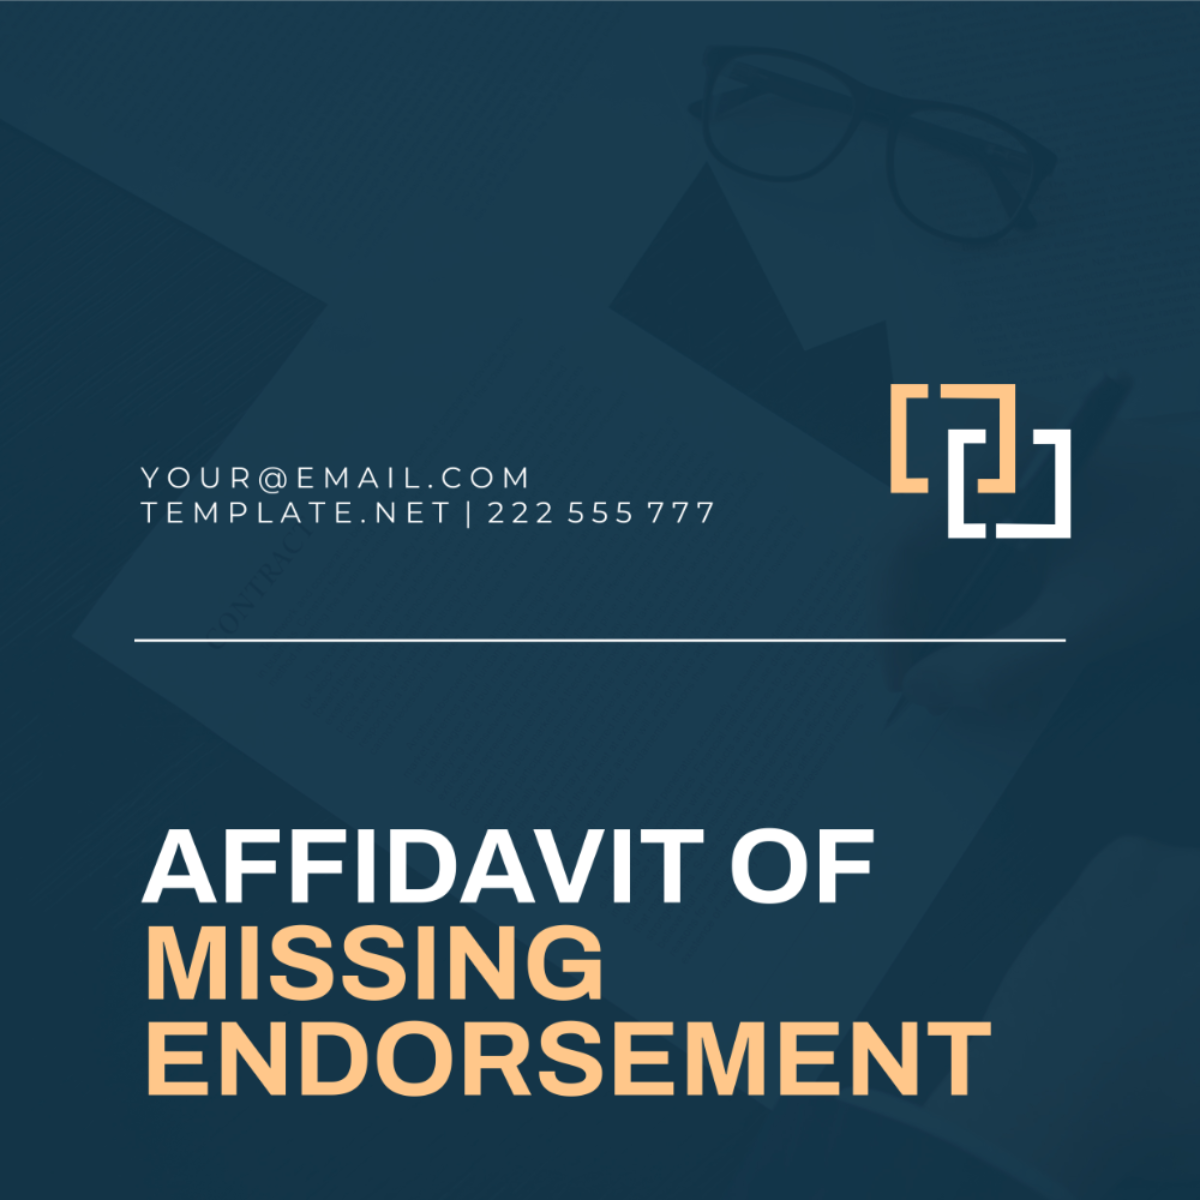 Affidavit of Missing Endorsement Template